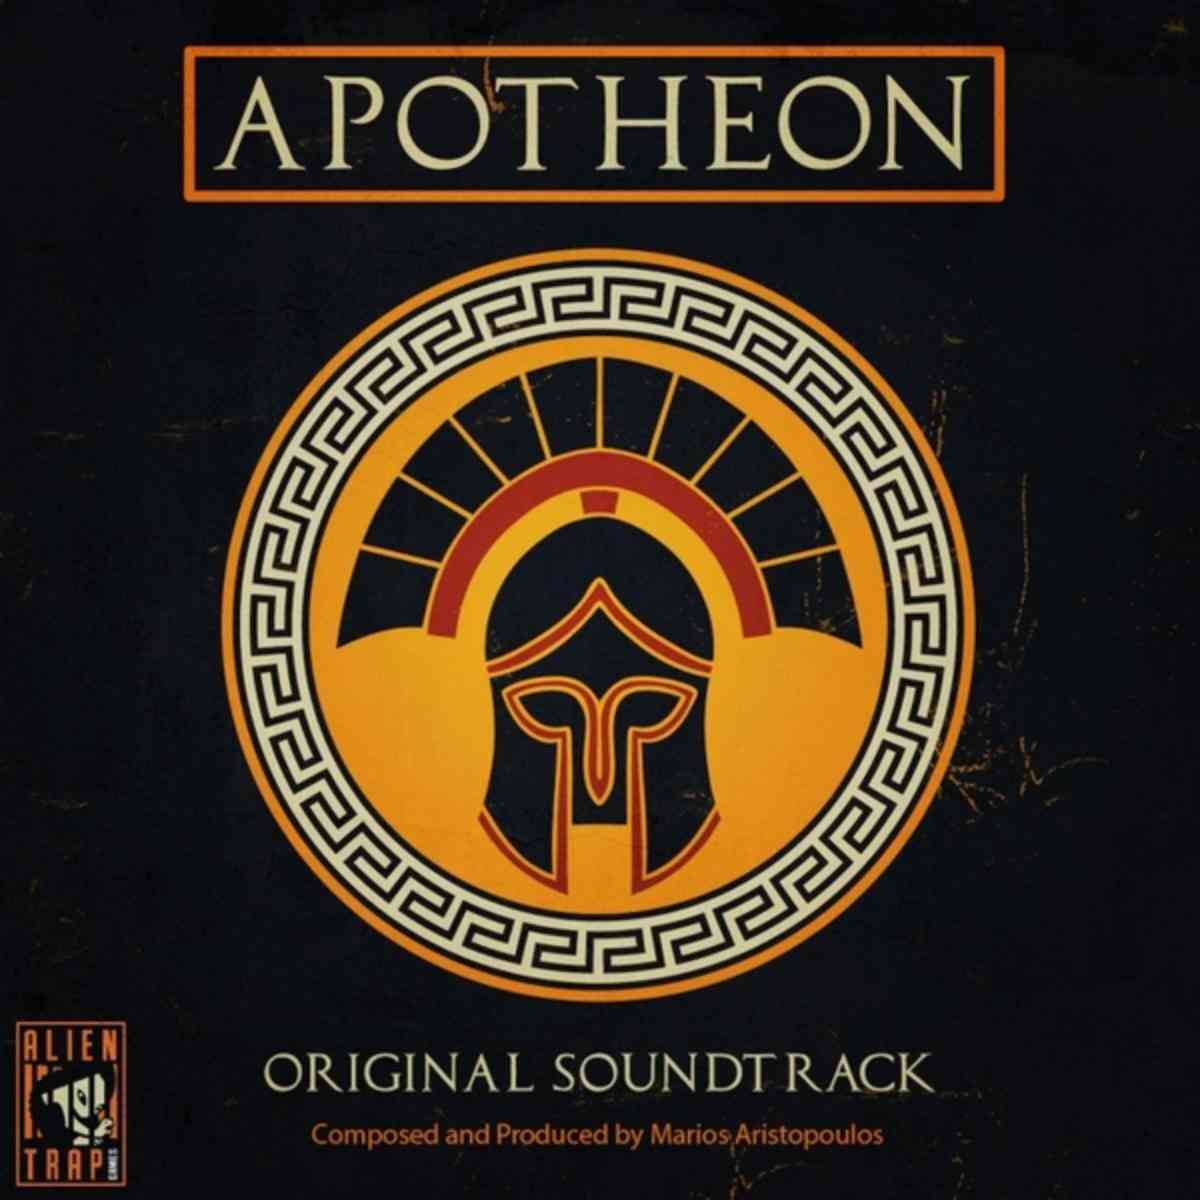 Apotheon Original Soundtrack